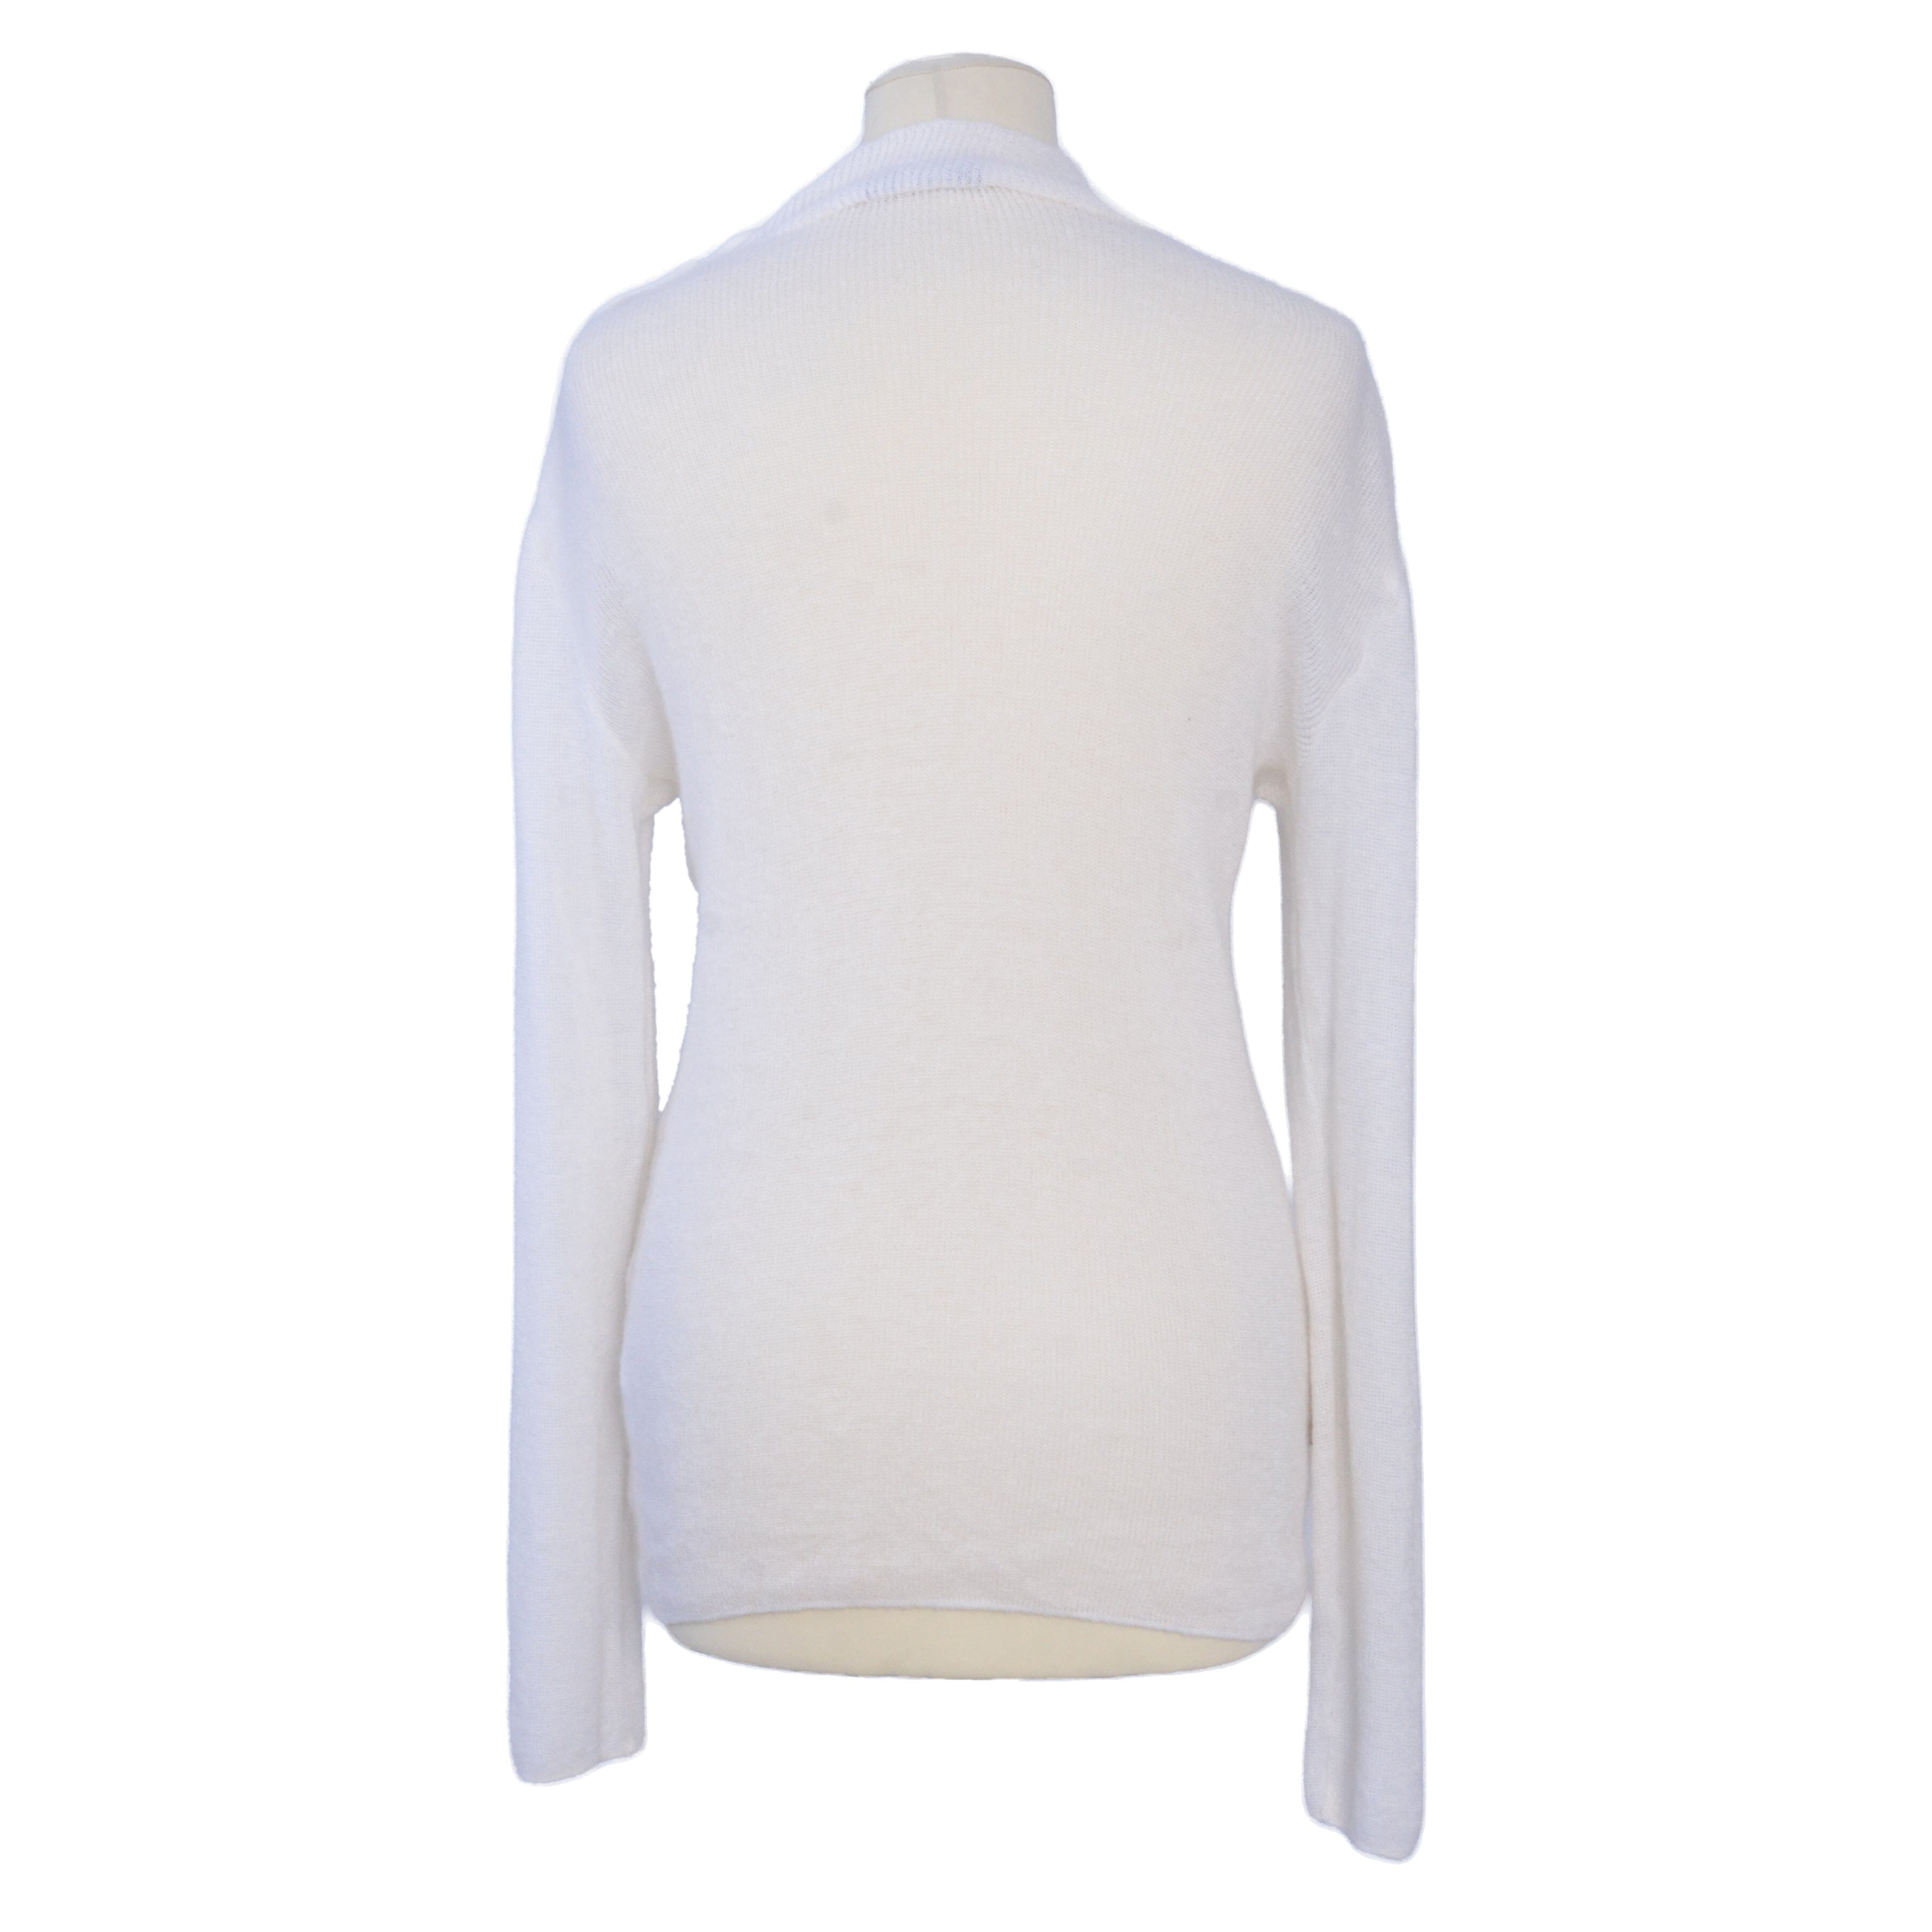 White Knitted Long Sleeve Turtle Neck Sweater Clothing Balmain